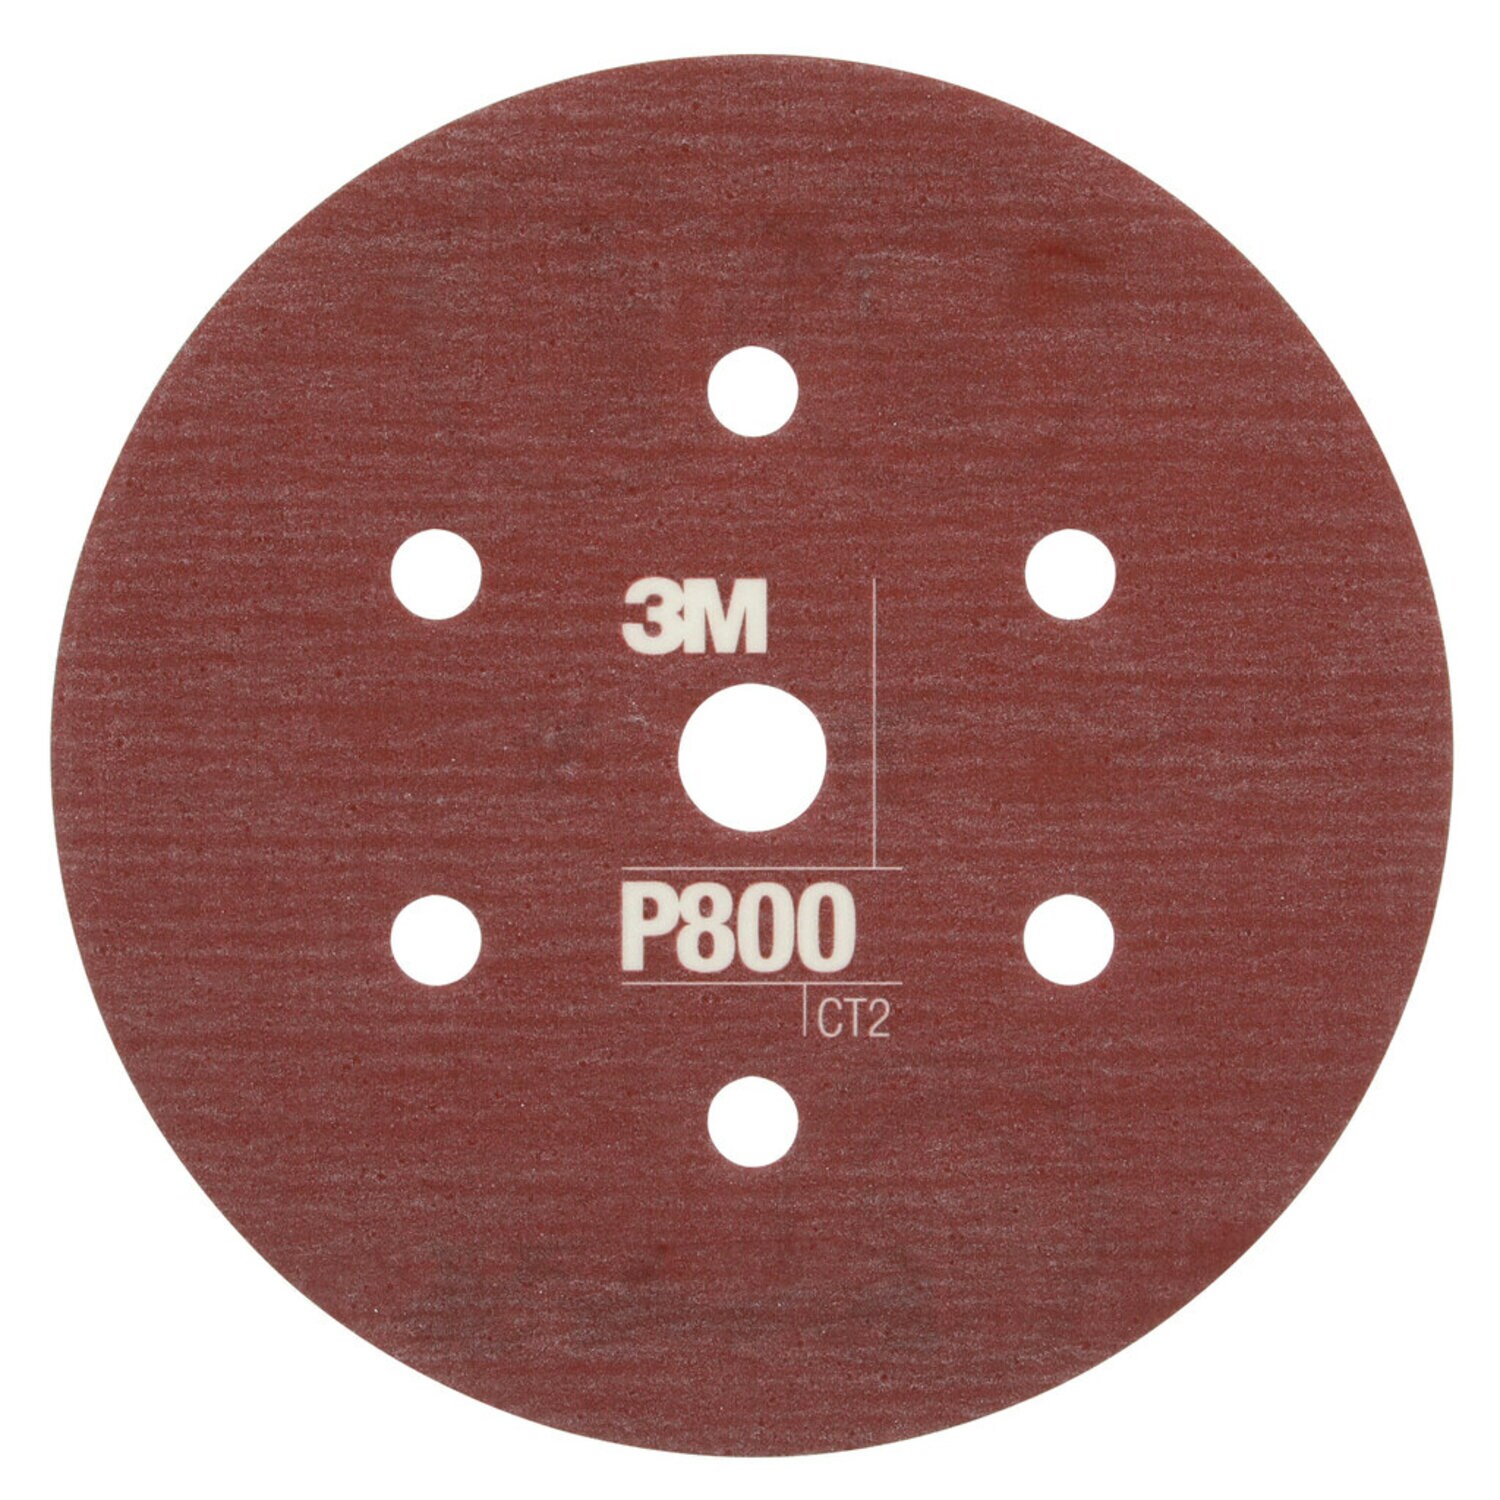 7000120195 - 3M Hookit Flexible Abrasive Disc 270J, 34406, 6 in, Dust Free, P800,
25 disc per carton, 5 cartons per case